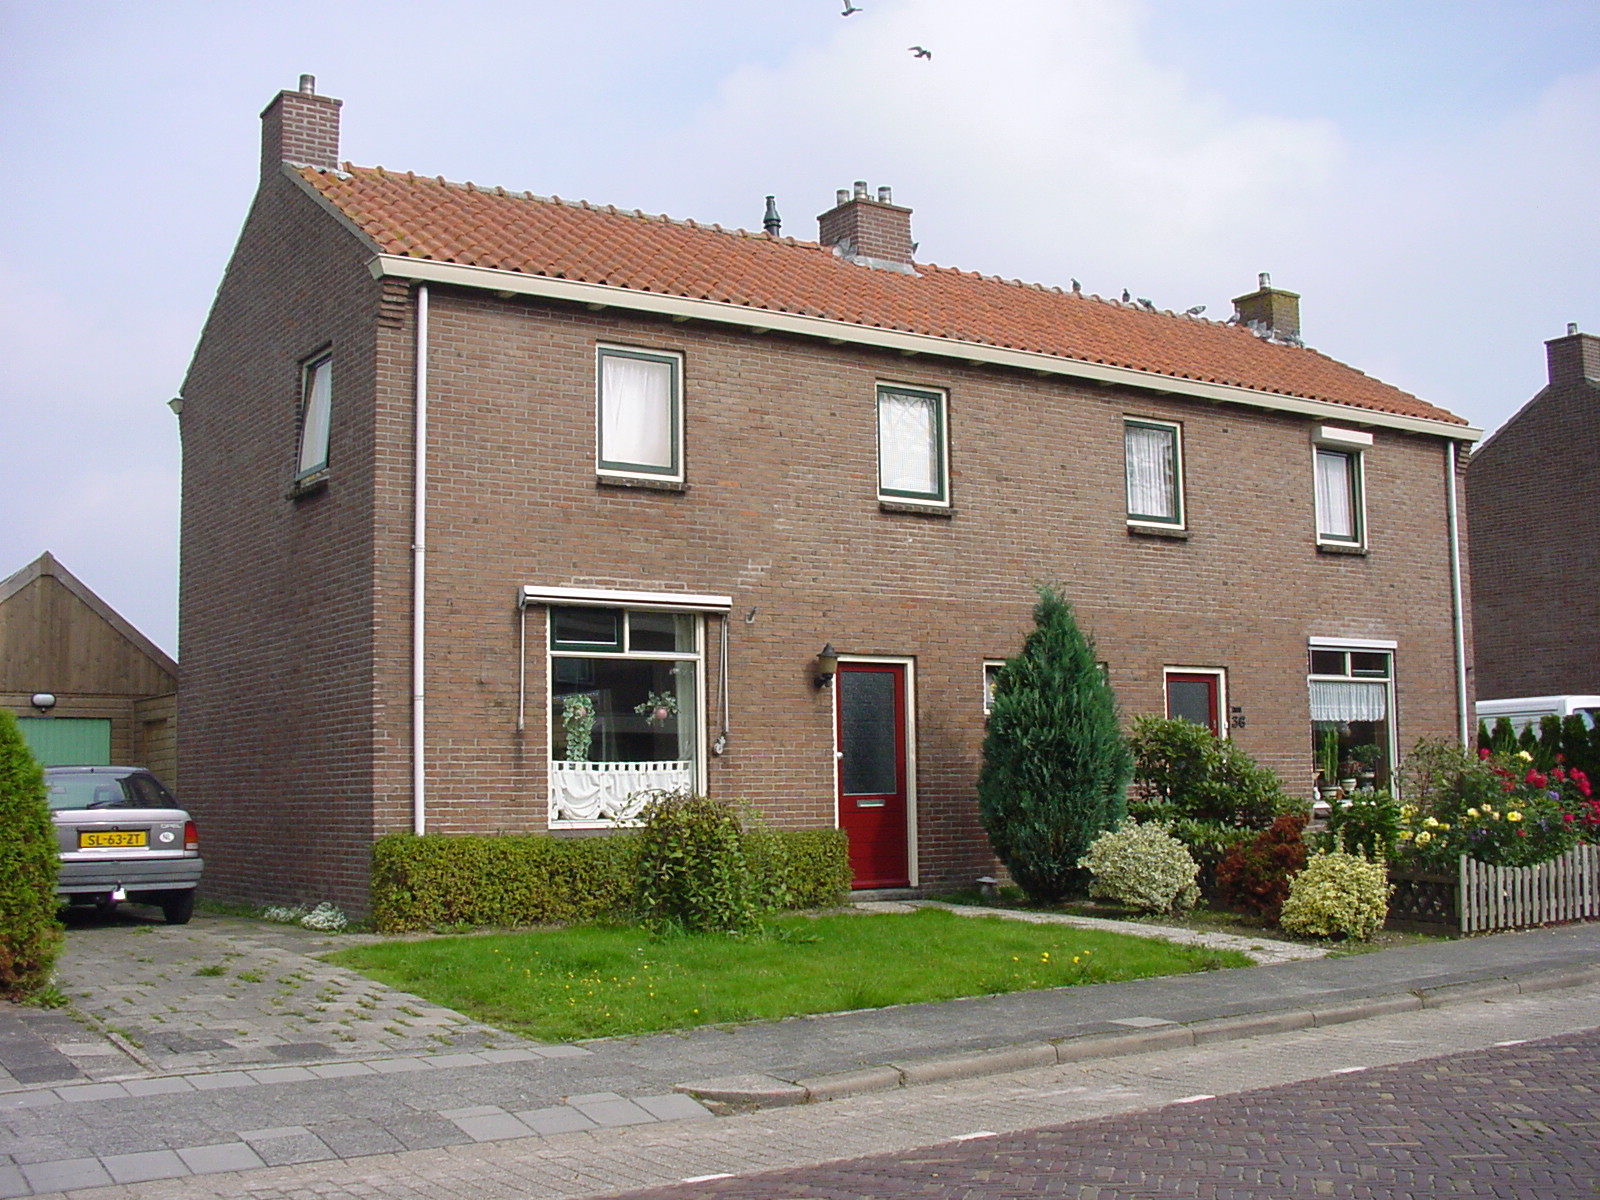 Ten Holtheweg 38, 8341 PG Steenwijkerwold, Nederland